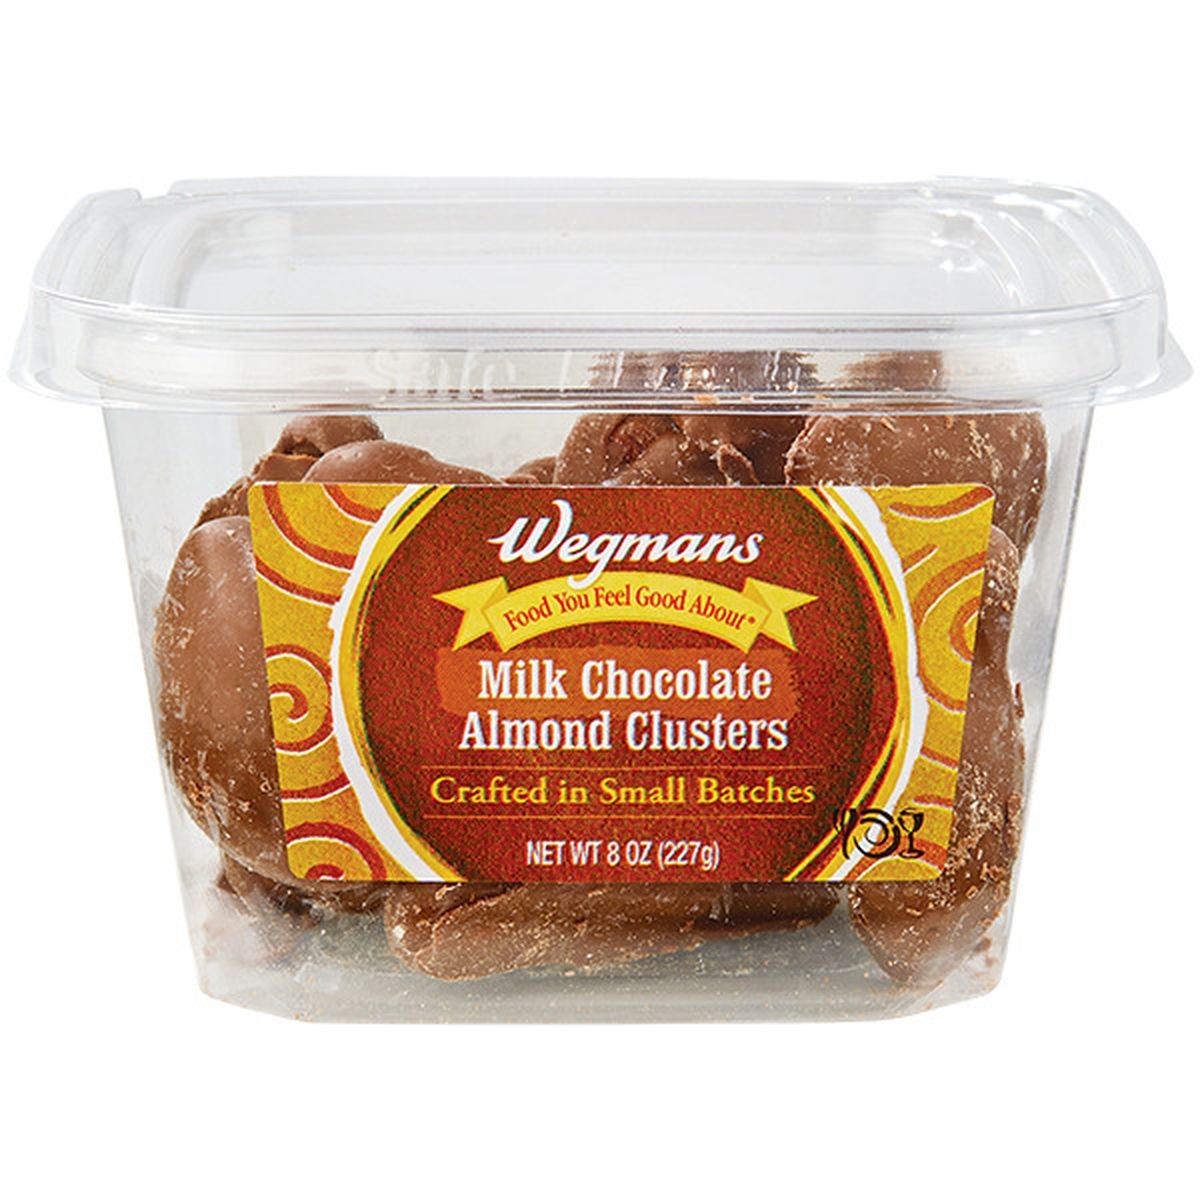 Calories in Wegmans Milk Chocolate Almond Clusters